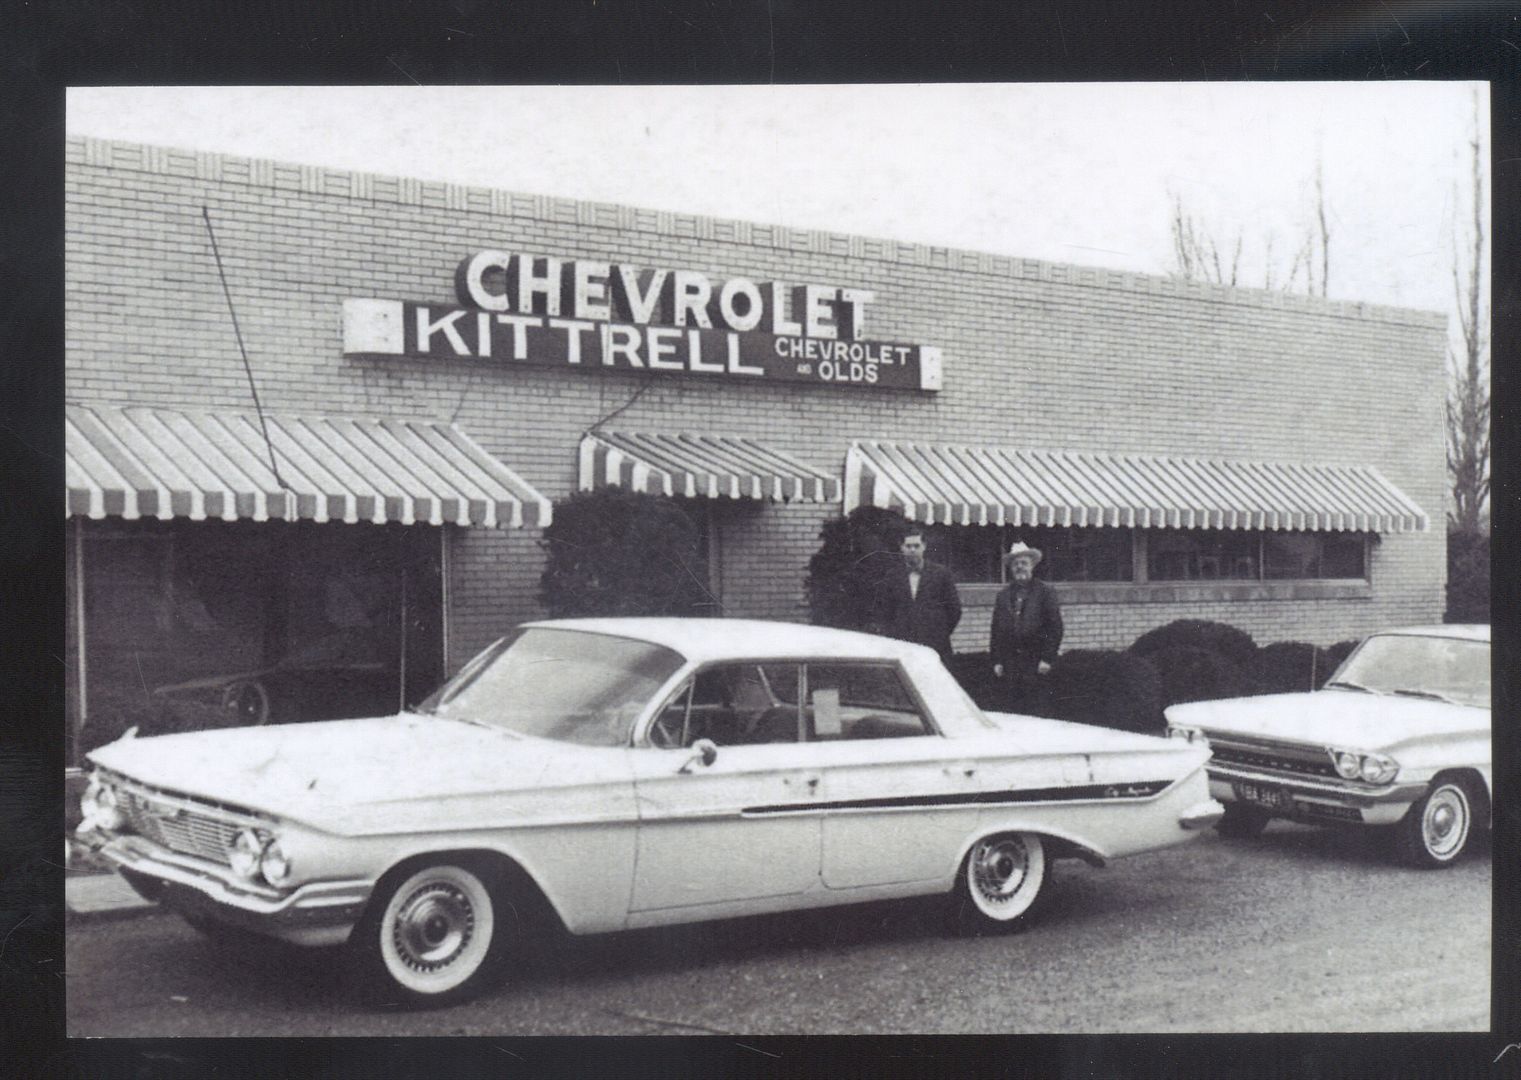 REAL PHOTO GENESEO ILLINOIS KITTRELL CHEVROLET CAR DEALER 1961 POSTCARD COPY